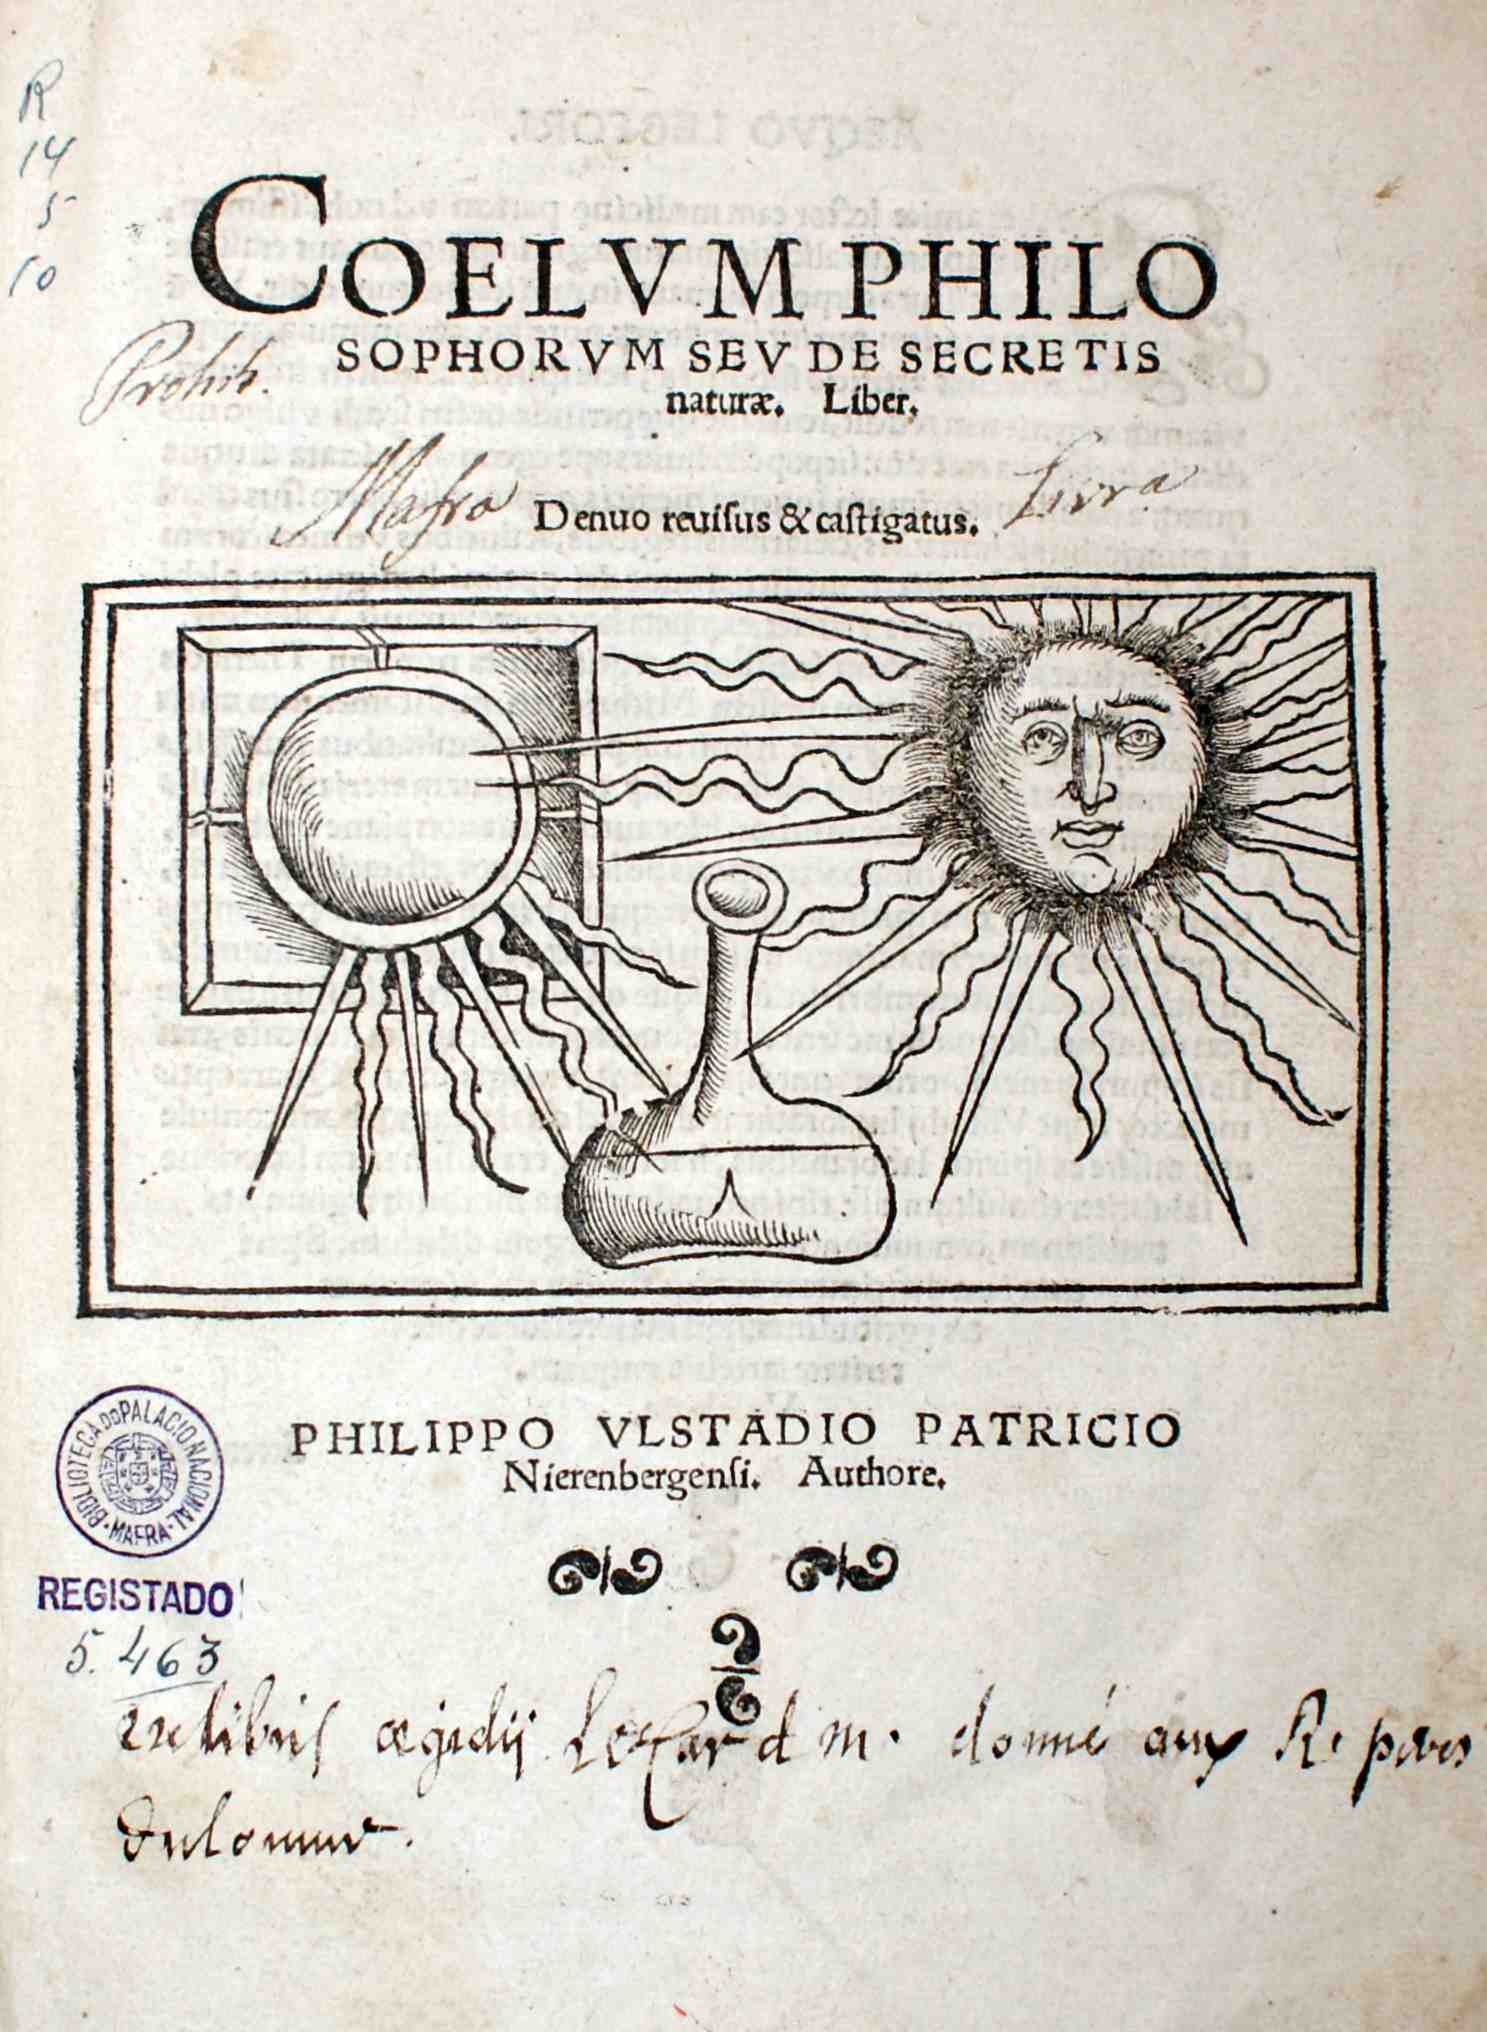 Coelvm philosophorvm... Philippo Vlstadio, 1525, Forbidden book  (BPNM)